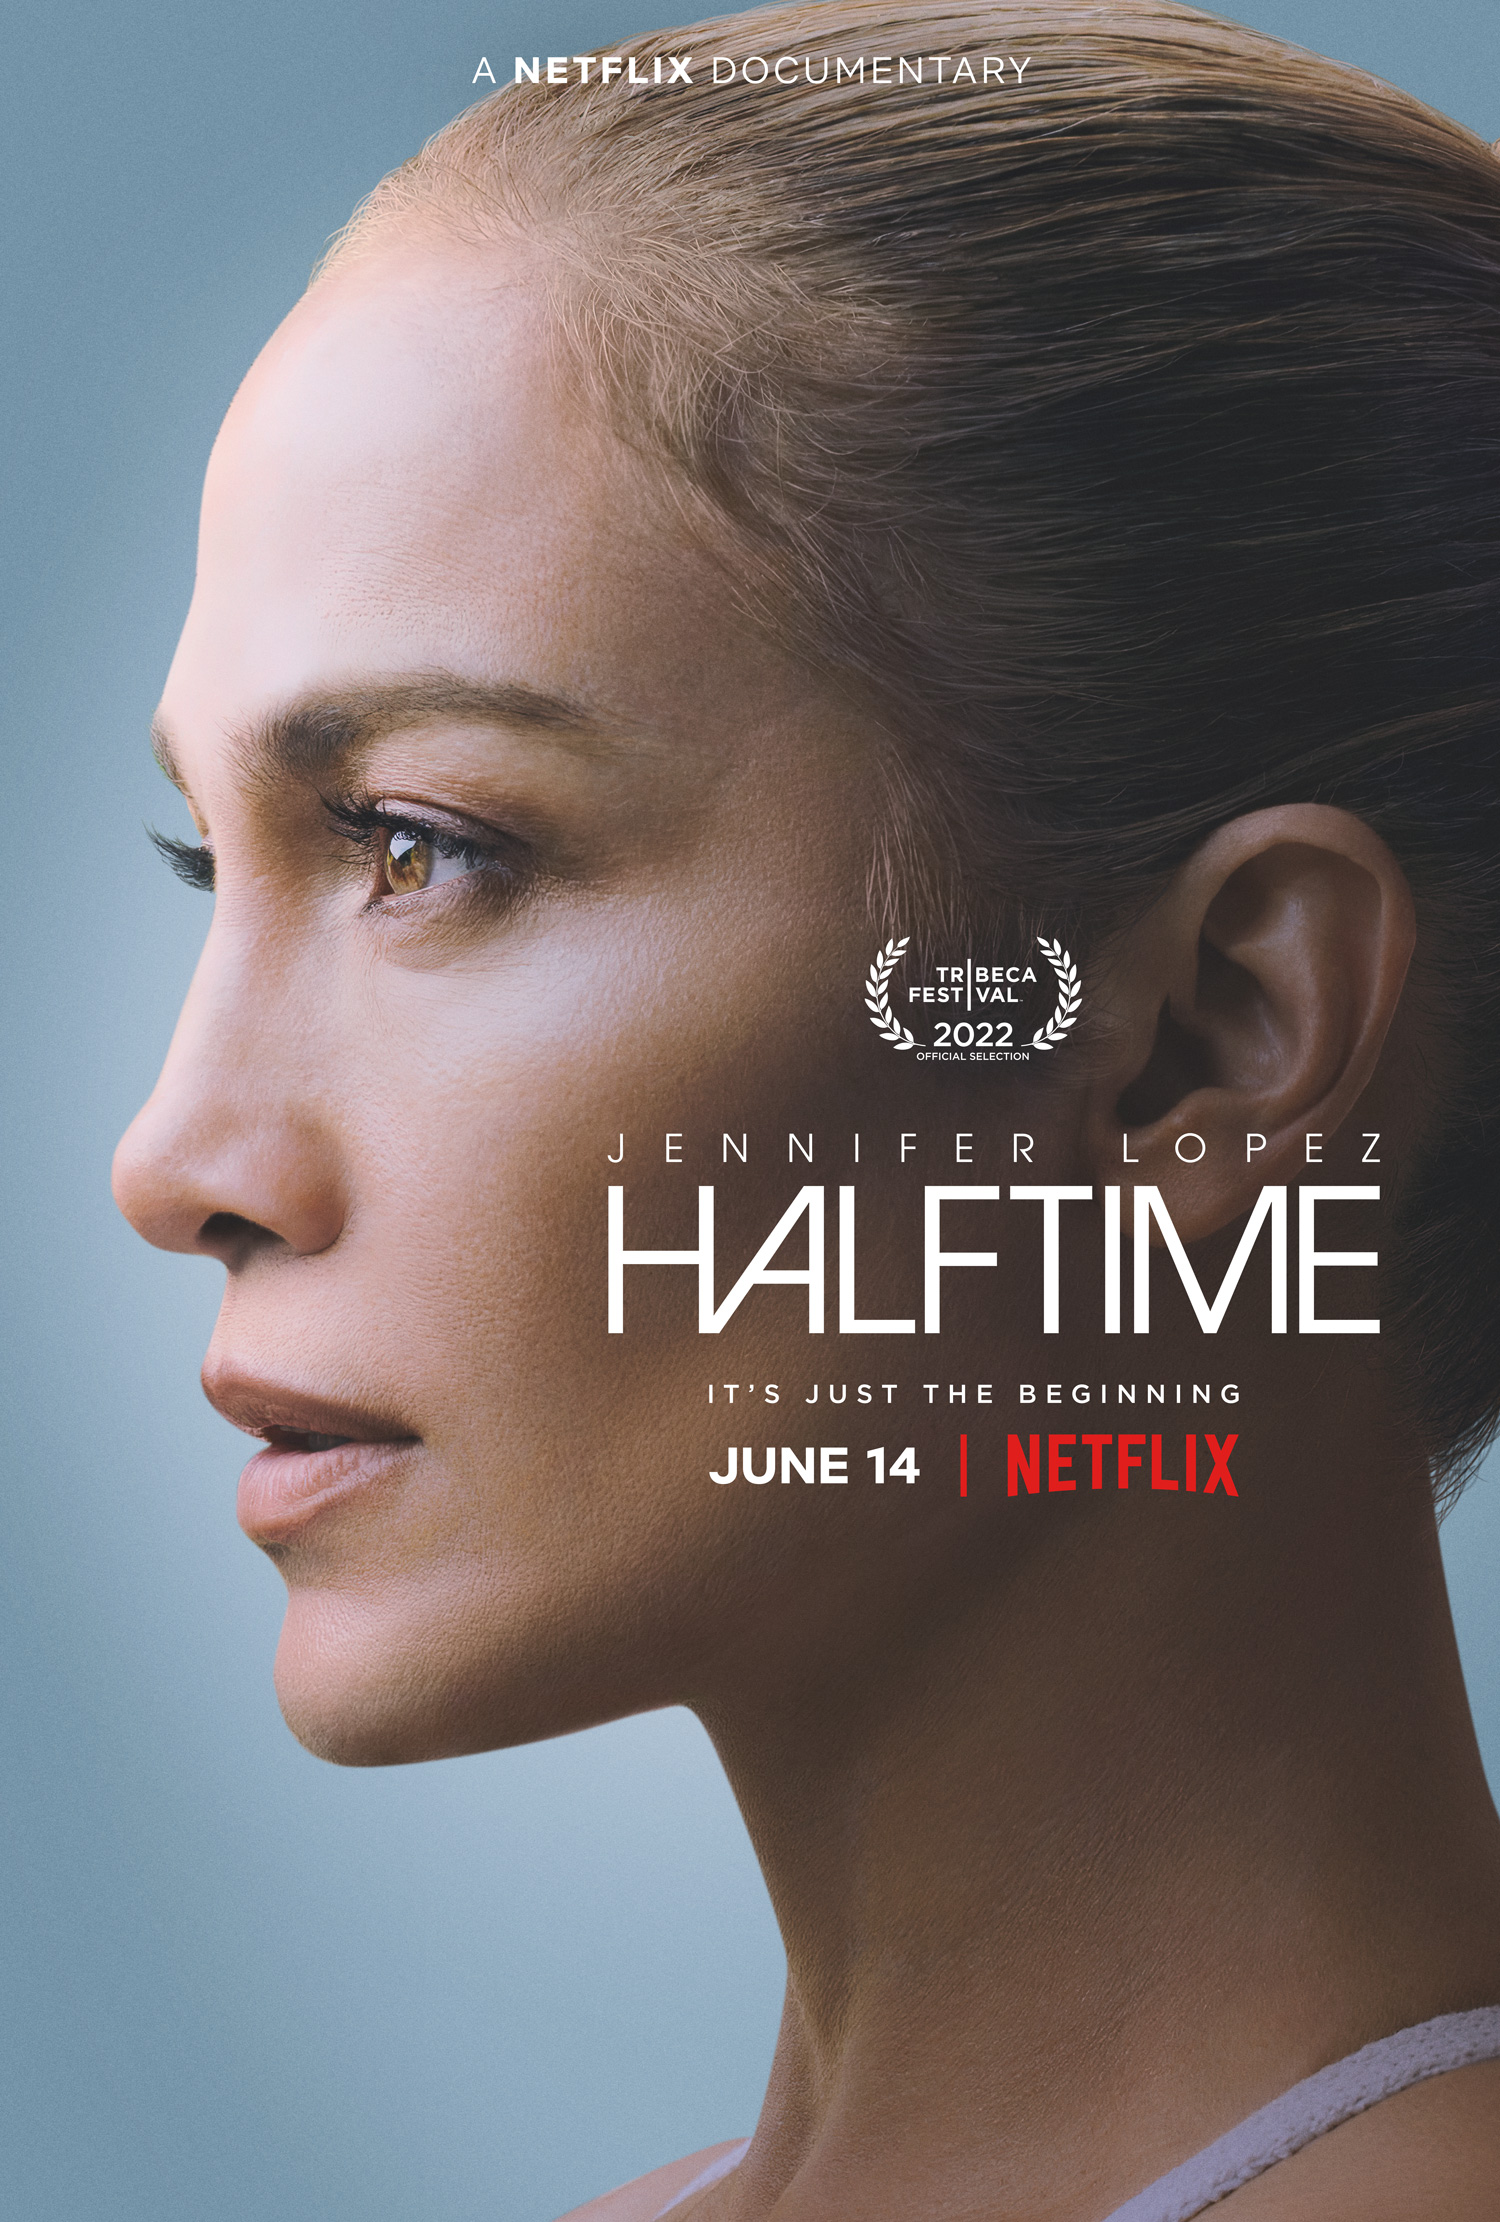 Jennifer Lopez Halftime Documentary